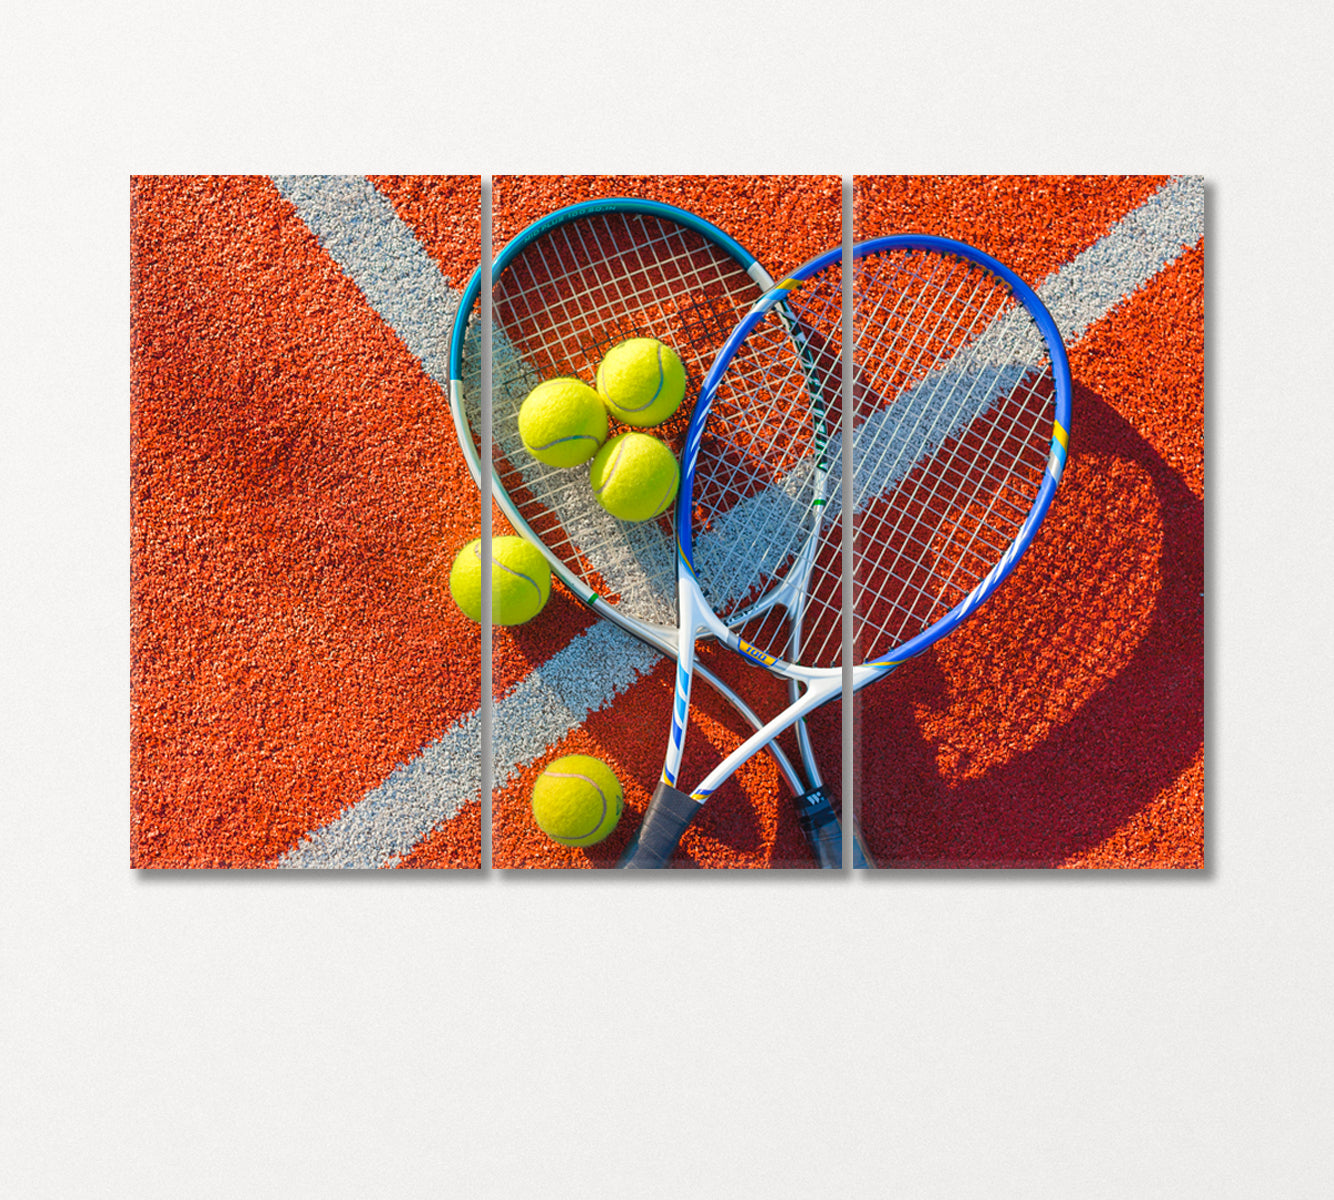 Pair of Tennis Rackets and Five Balls Canvas Print-Canvas Print-CetArt-3 Panels-36x24 inches-CetArt